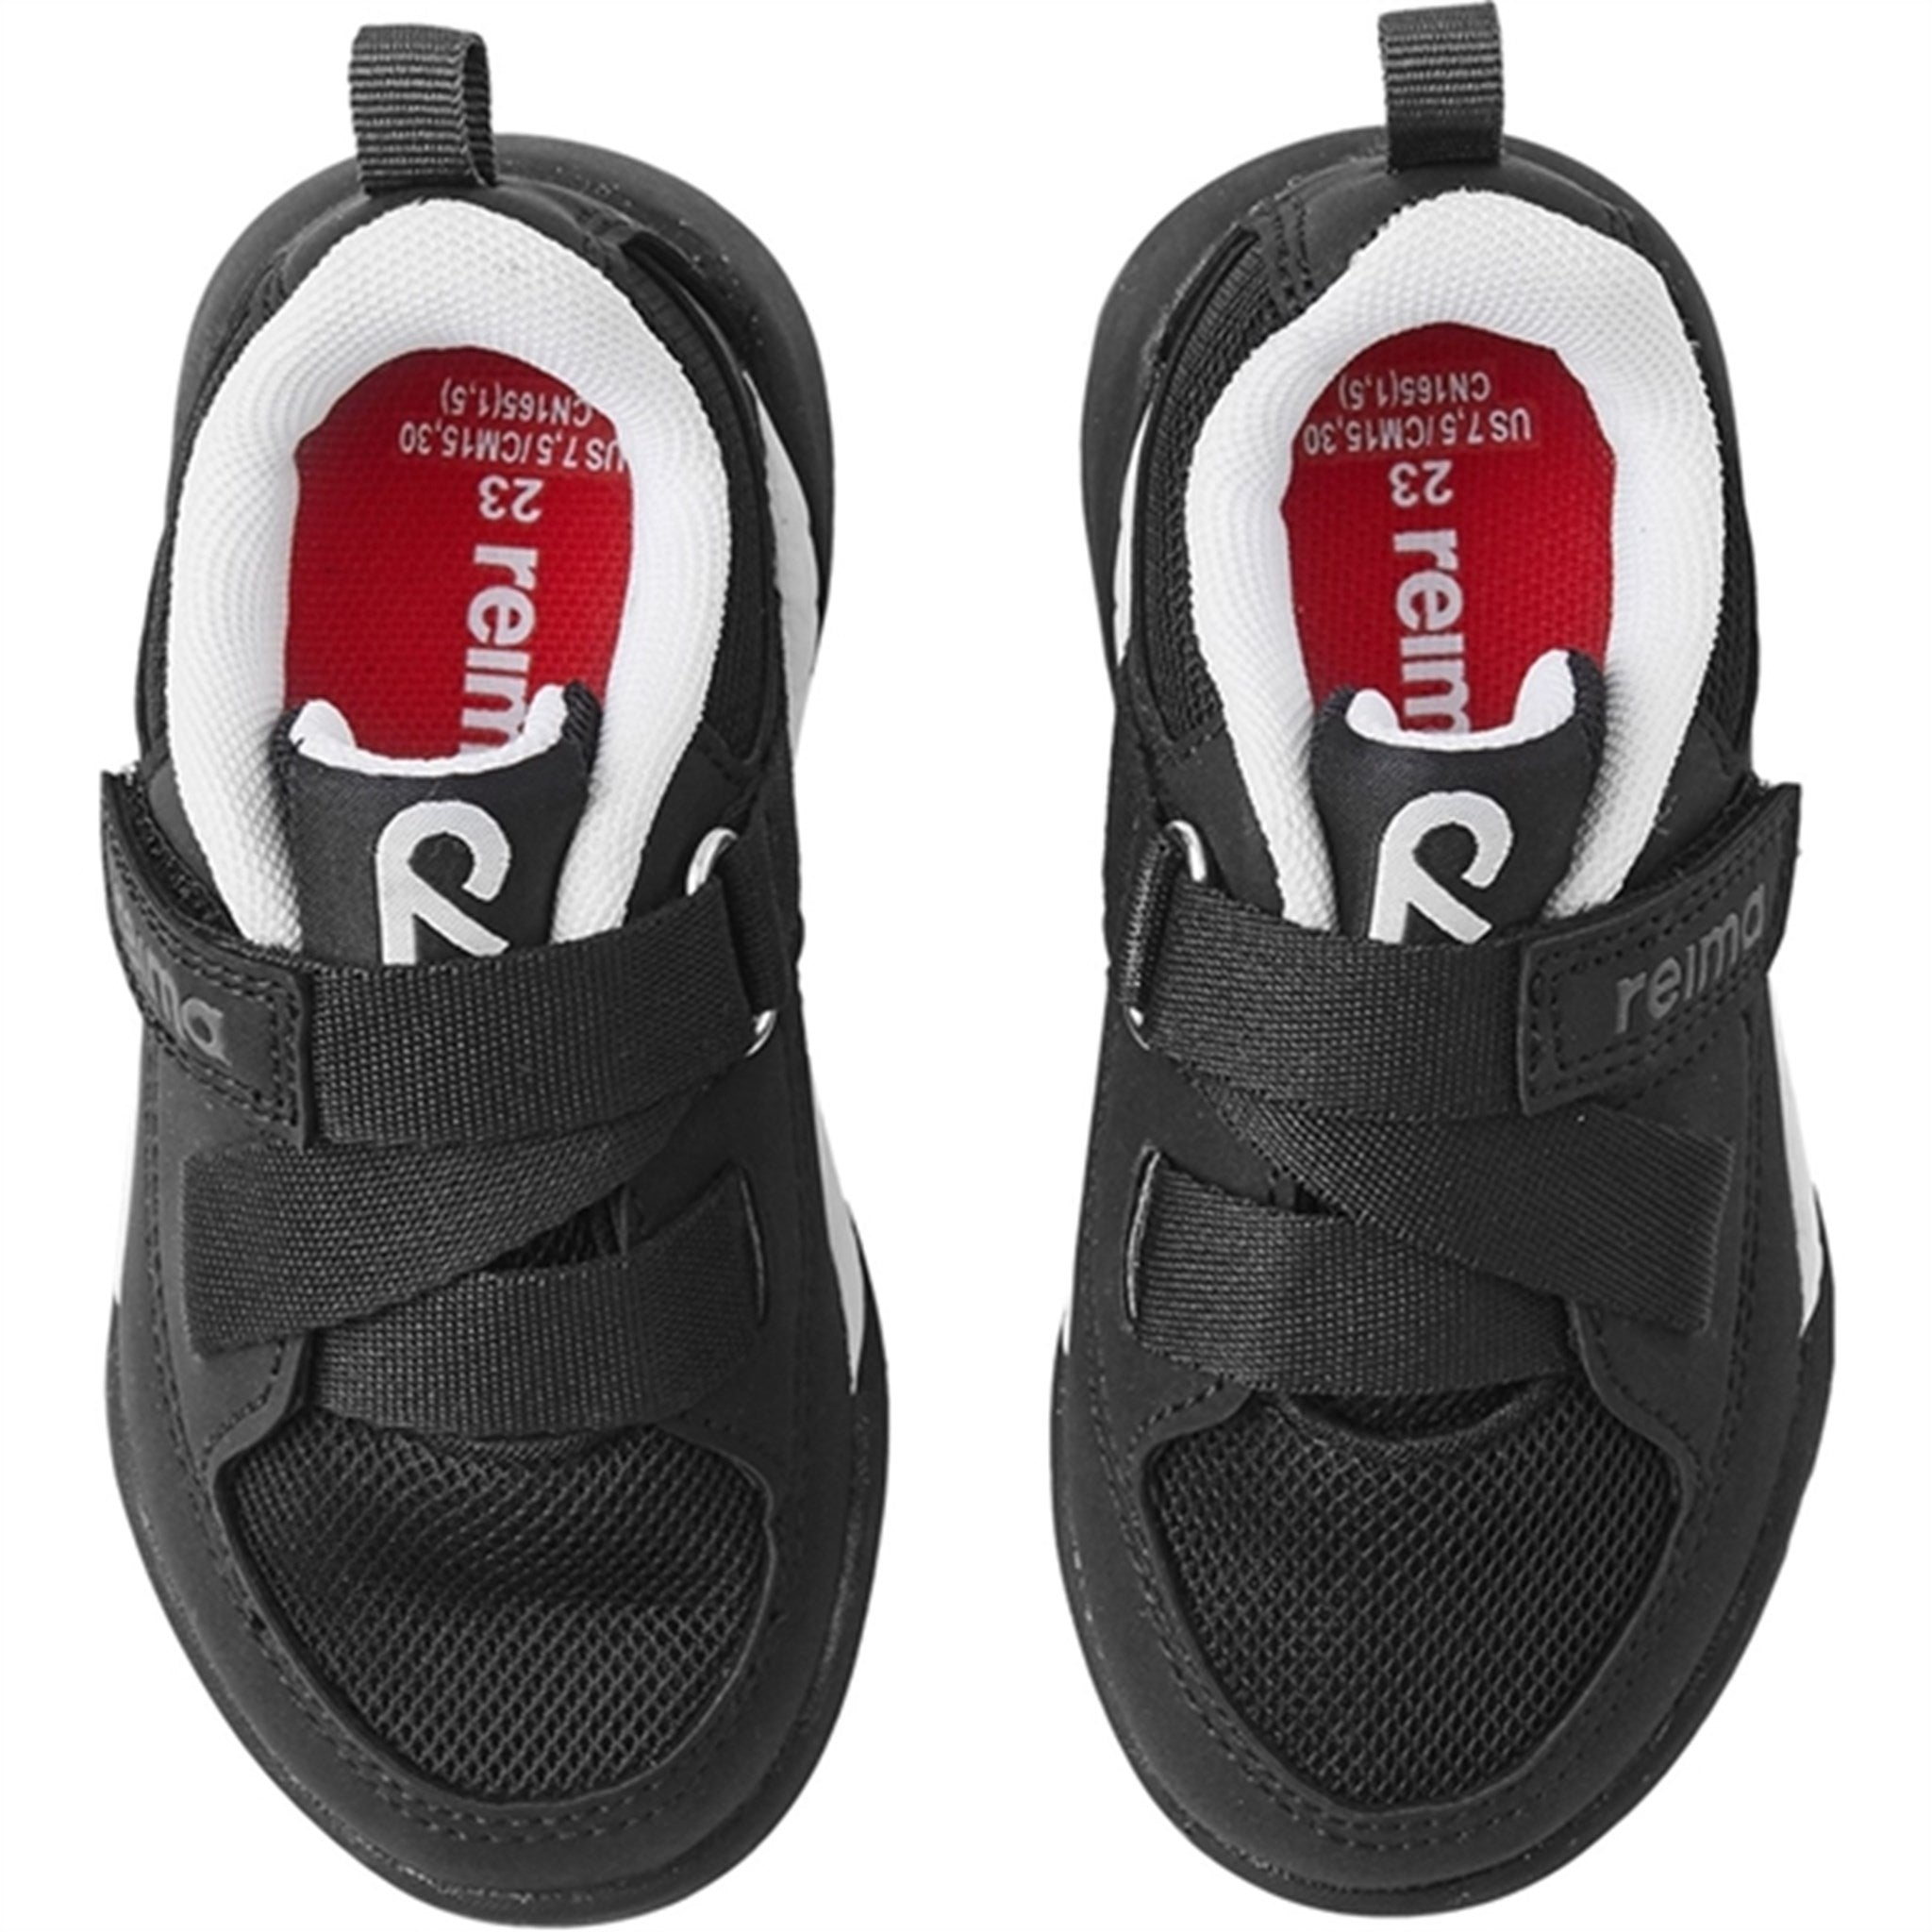 Reima Reimatec Waterproof Sneakers Kiirus Black 4